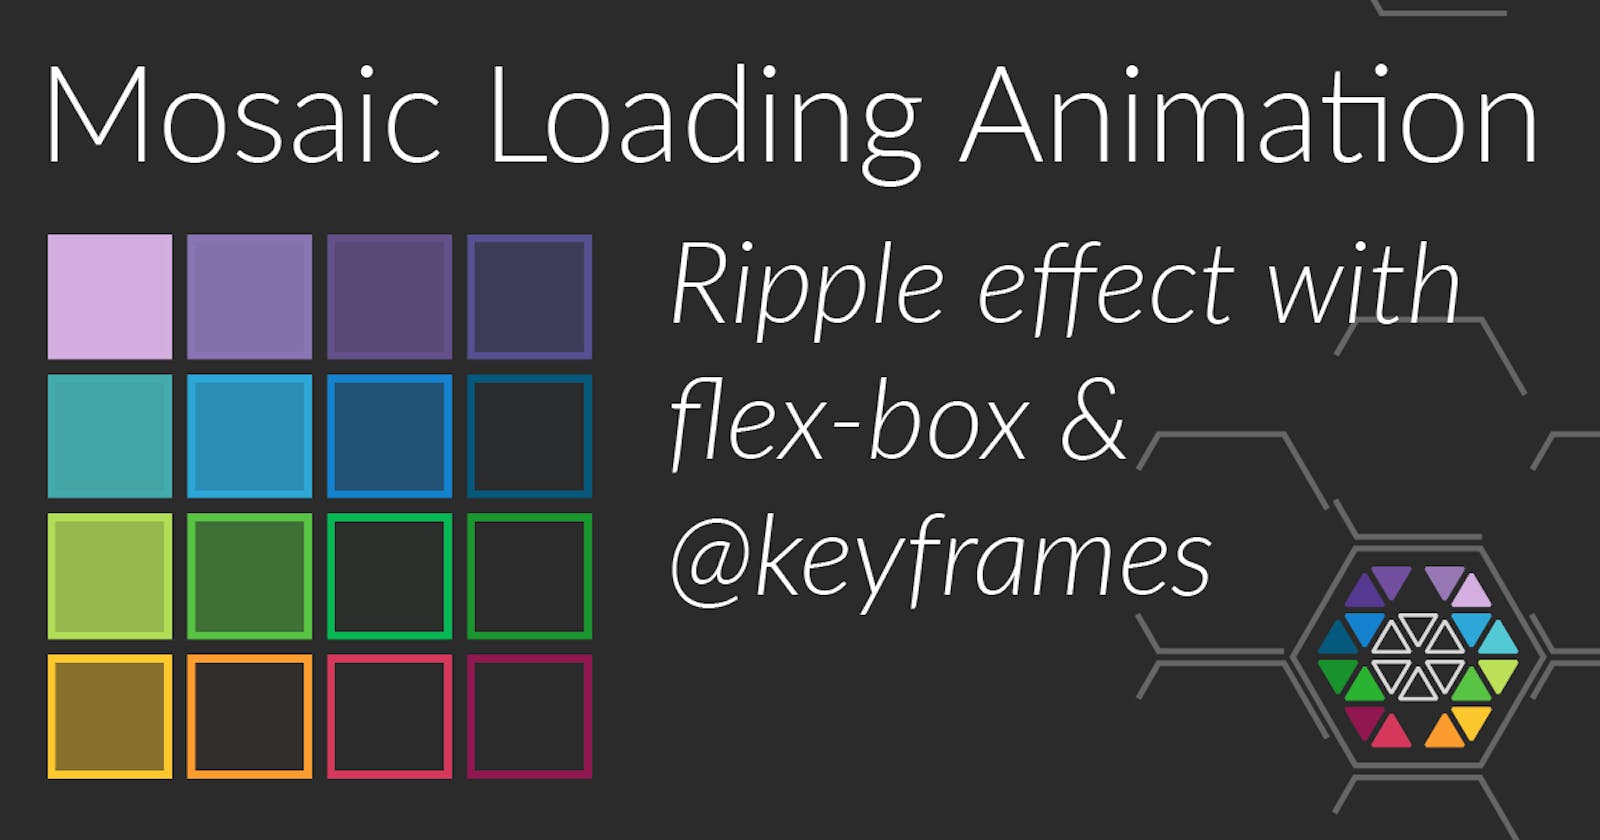 CSS Loading Animation - Ripple Effect in Mosaic (keyframes, flex box)